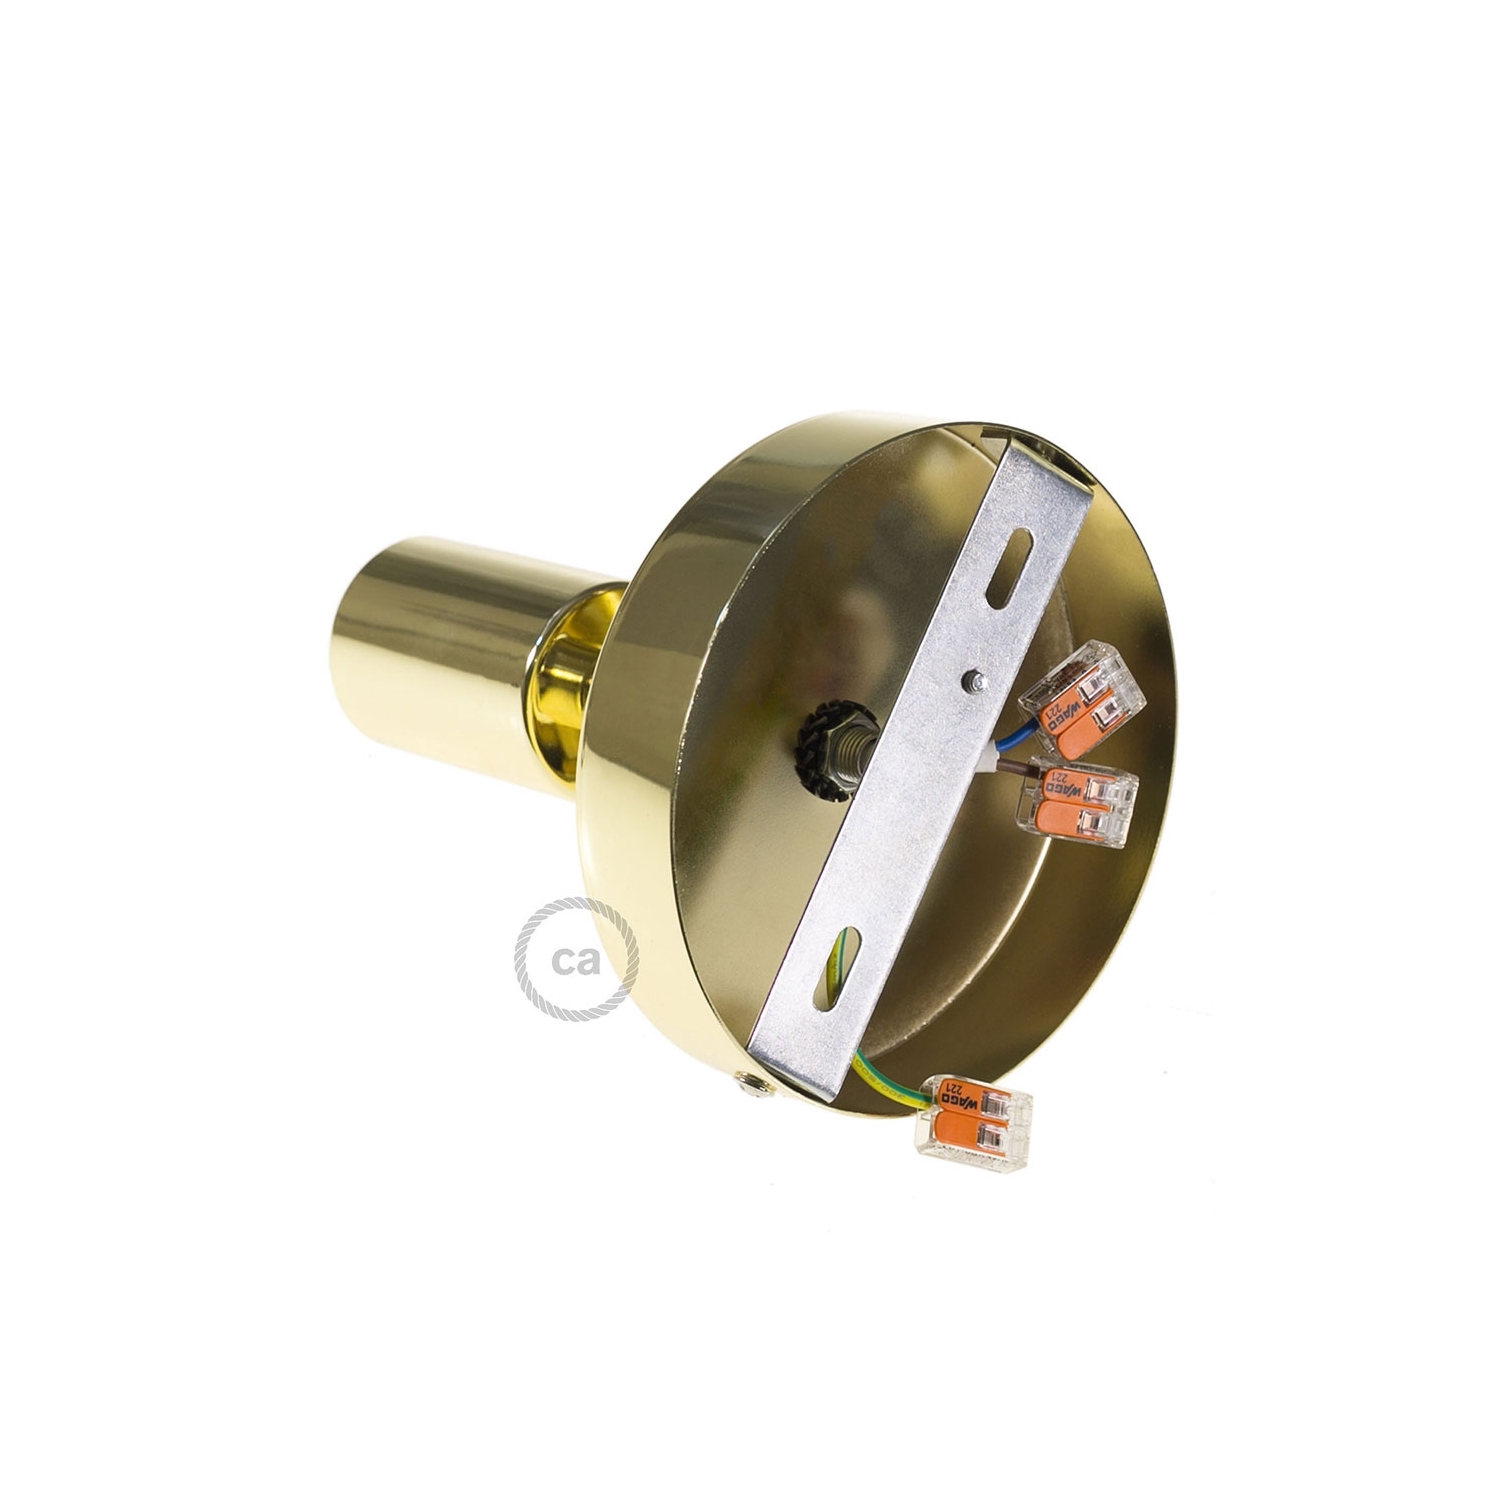 Fermaluce Metallo 90° Brass finish adjustable, metal wall flush light